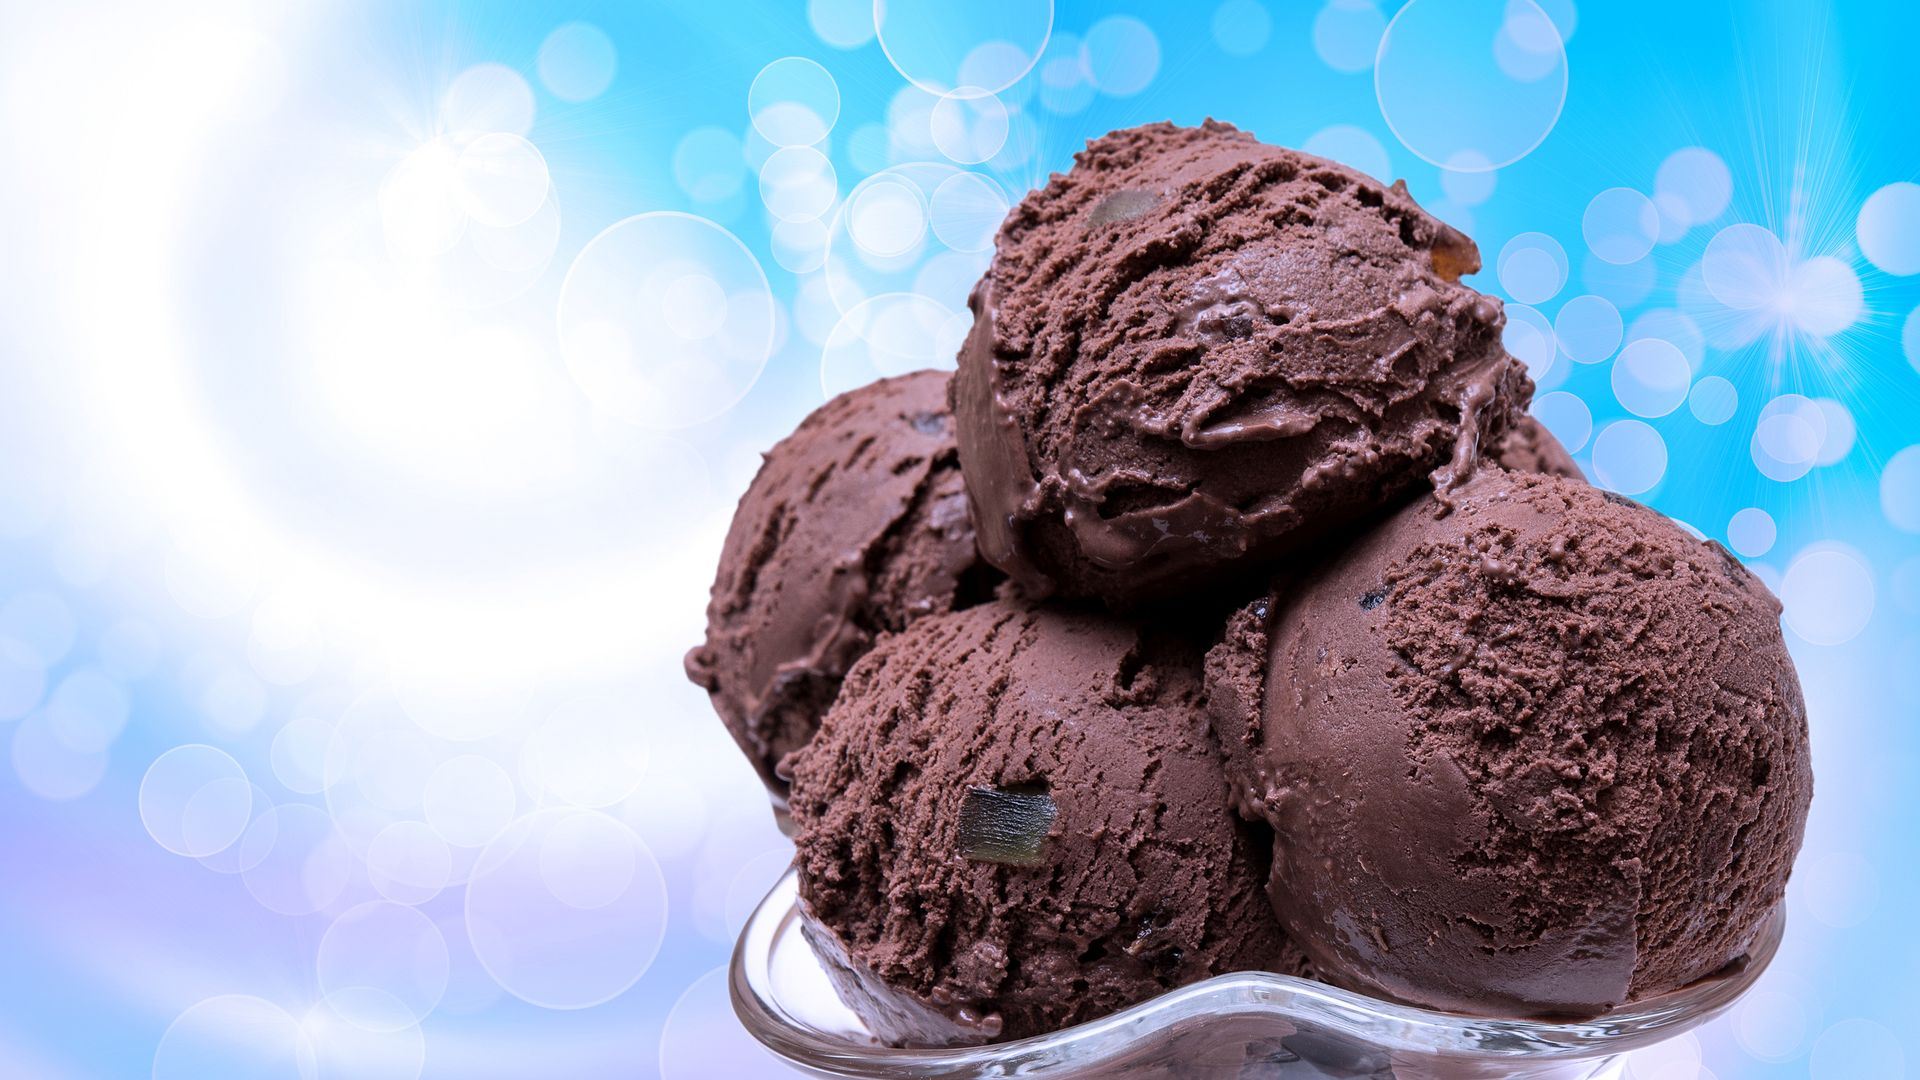 Bokeh Background And Ice Cream HD Wallpaper Chocolate Ice Cream